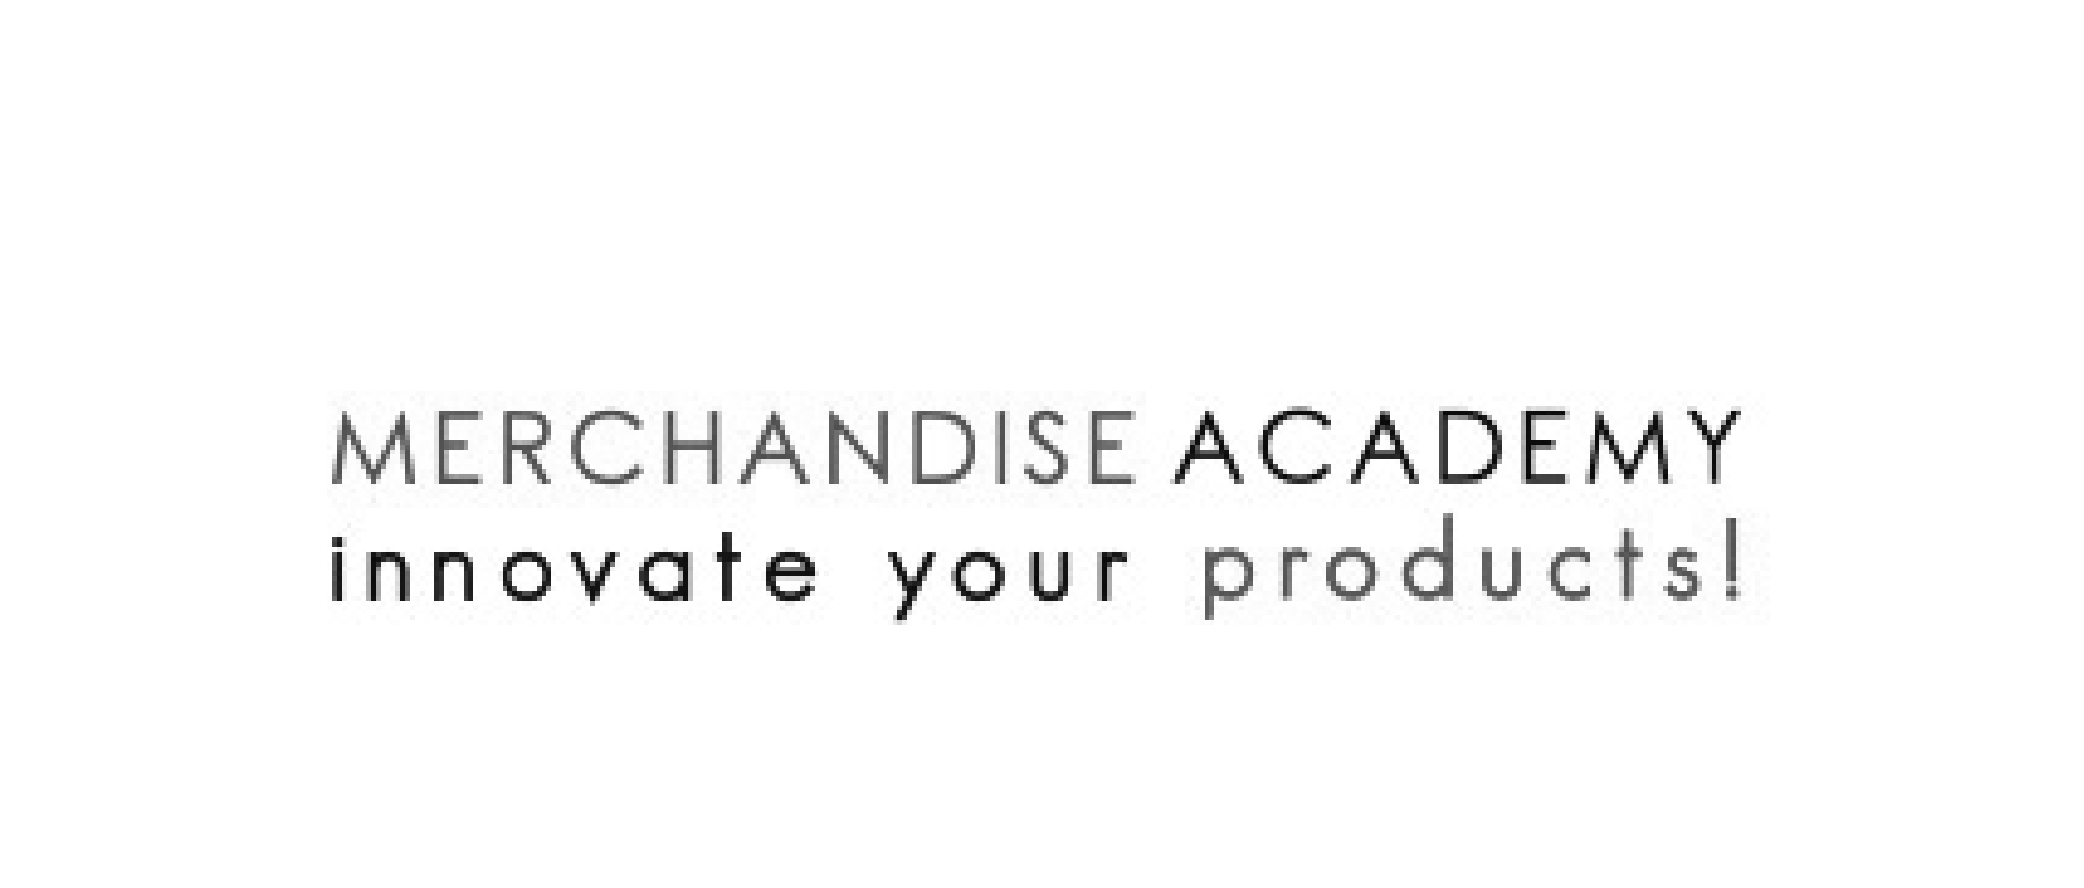 Merchandise academy